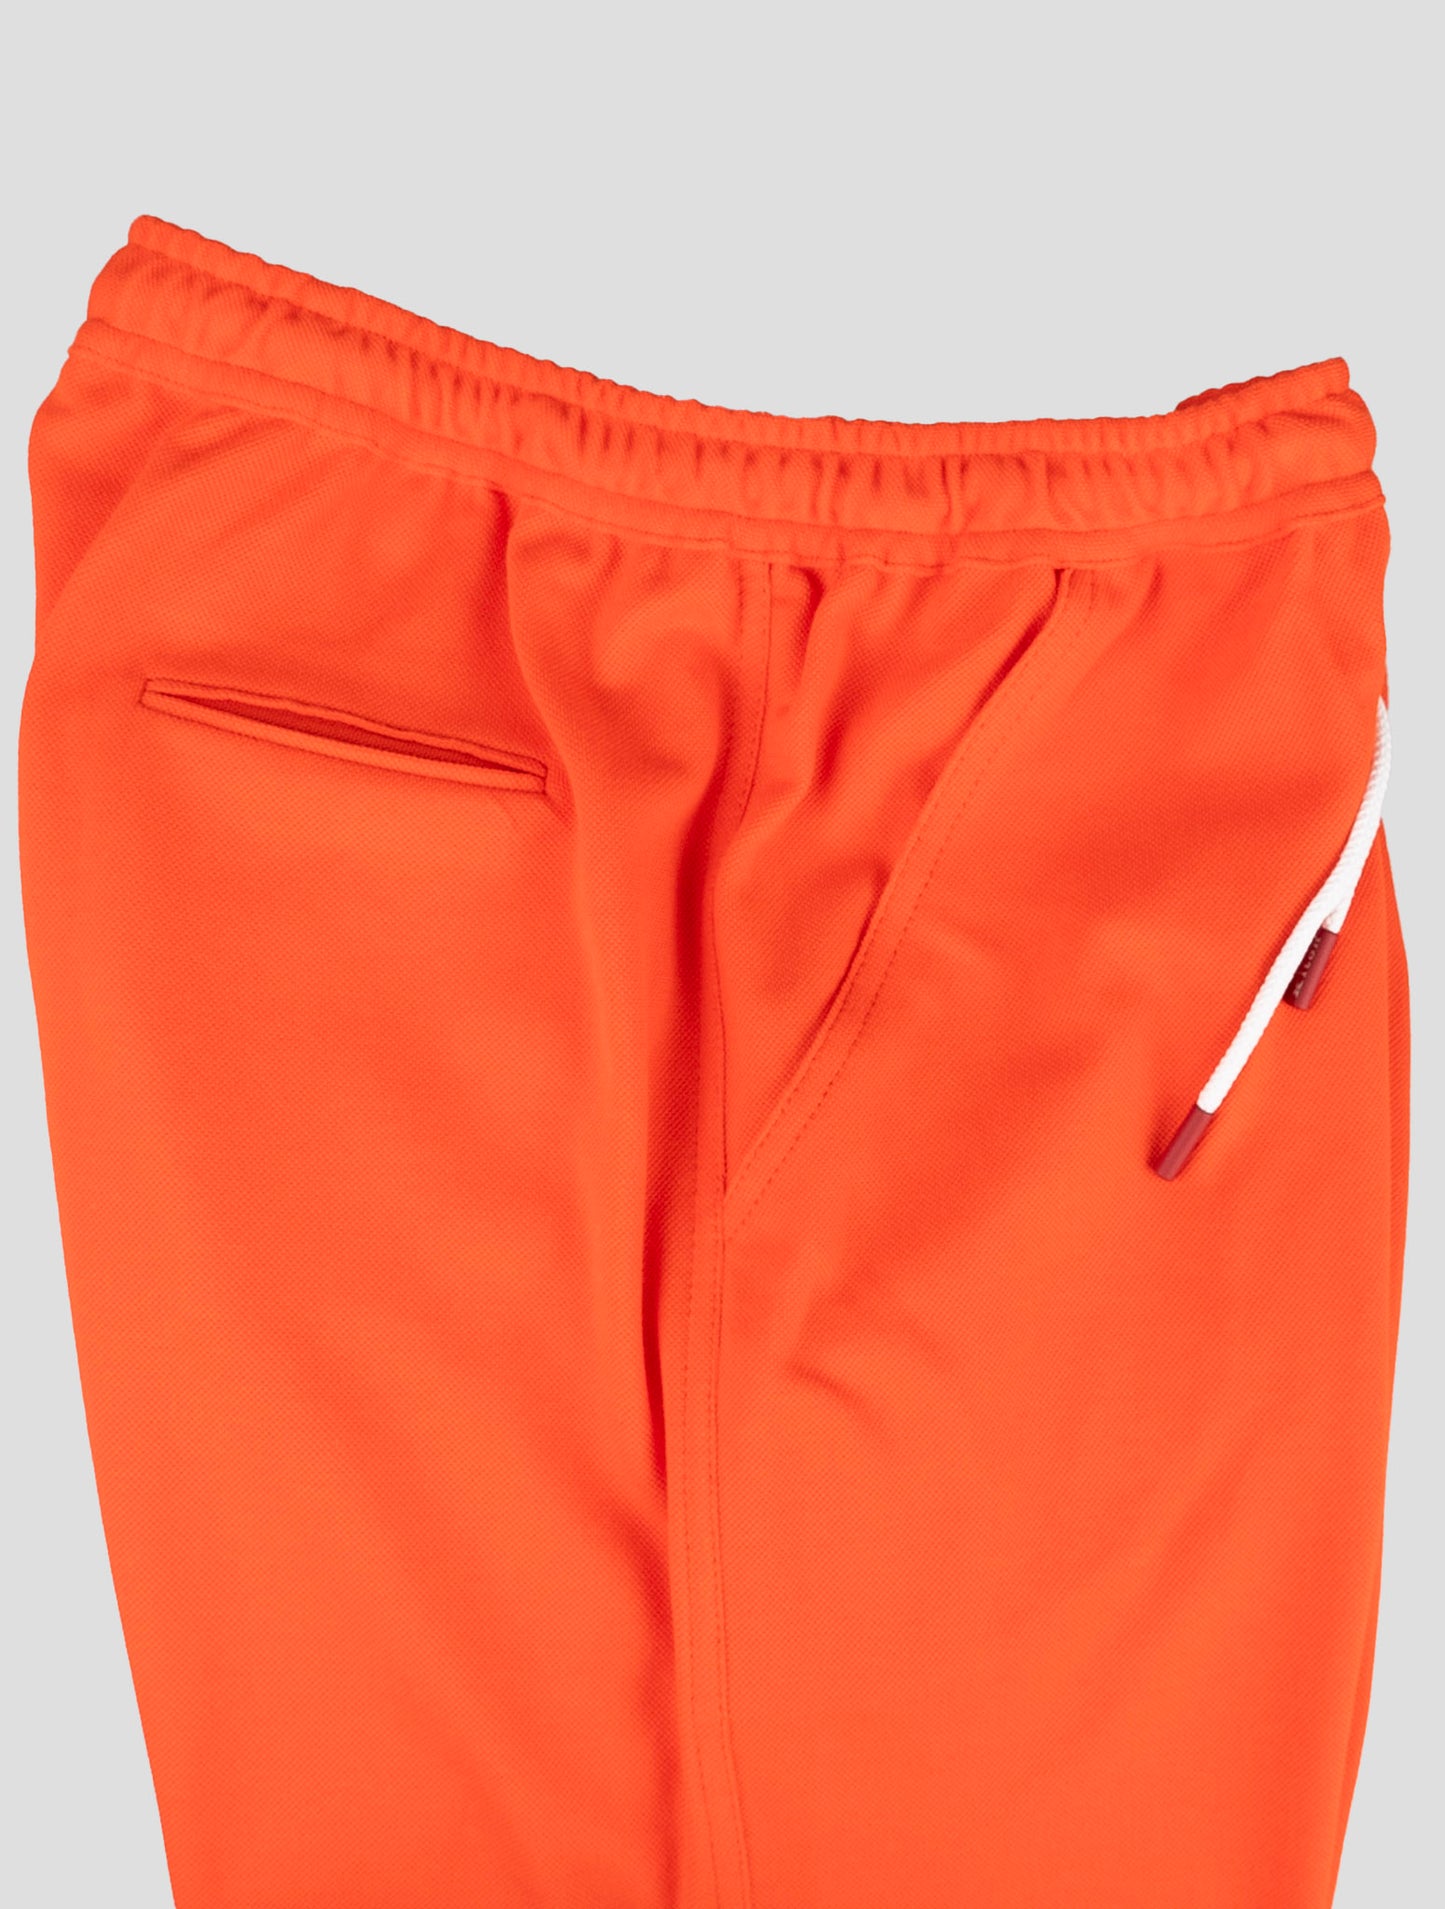 Kiton Matching Outfit-Survêtement Pantalon Court Mariano Bleu et Orange